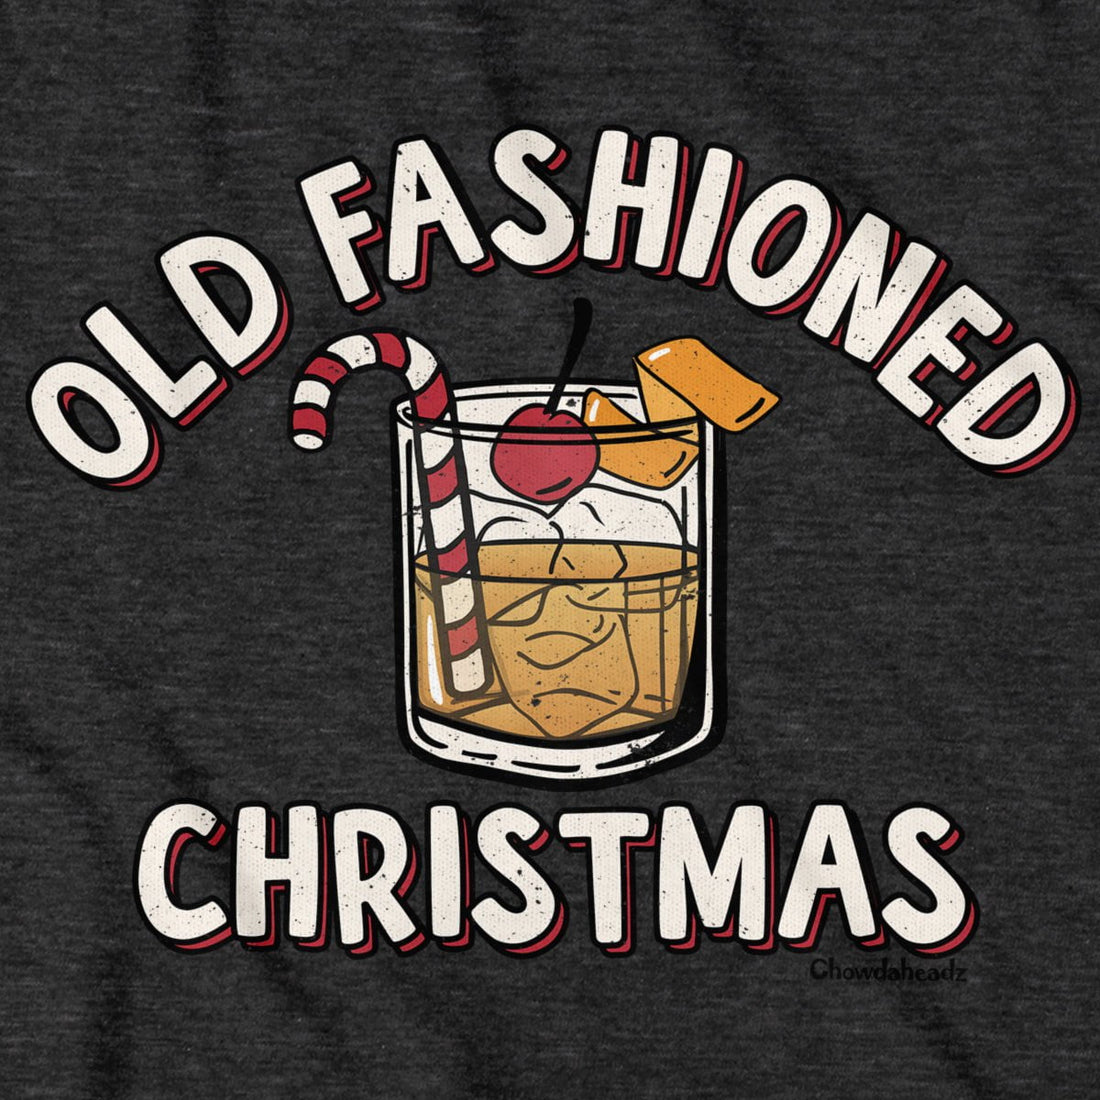 Old Fashioned Christmas Hoodie - Chowdaheadz